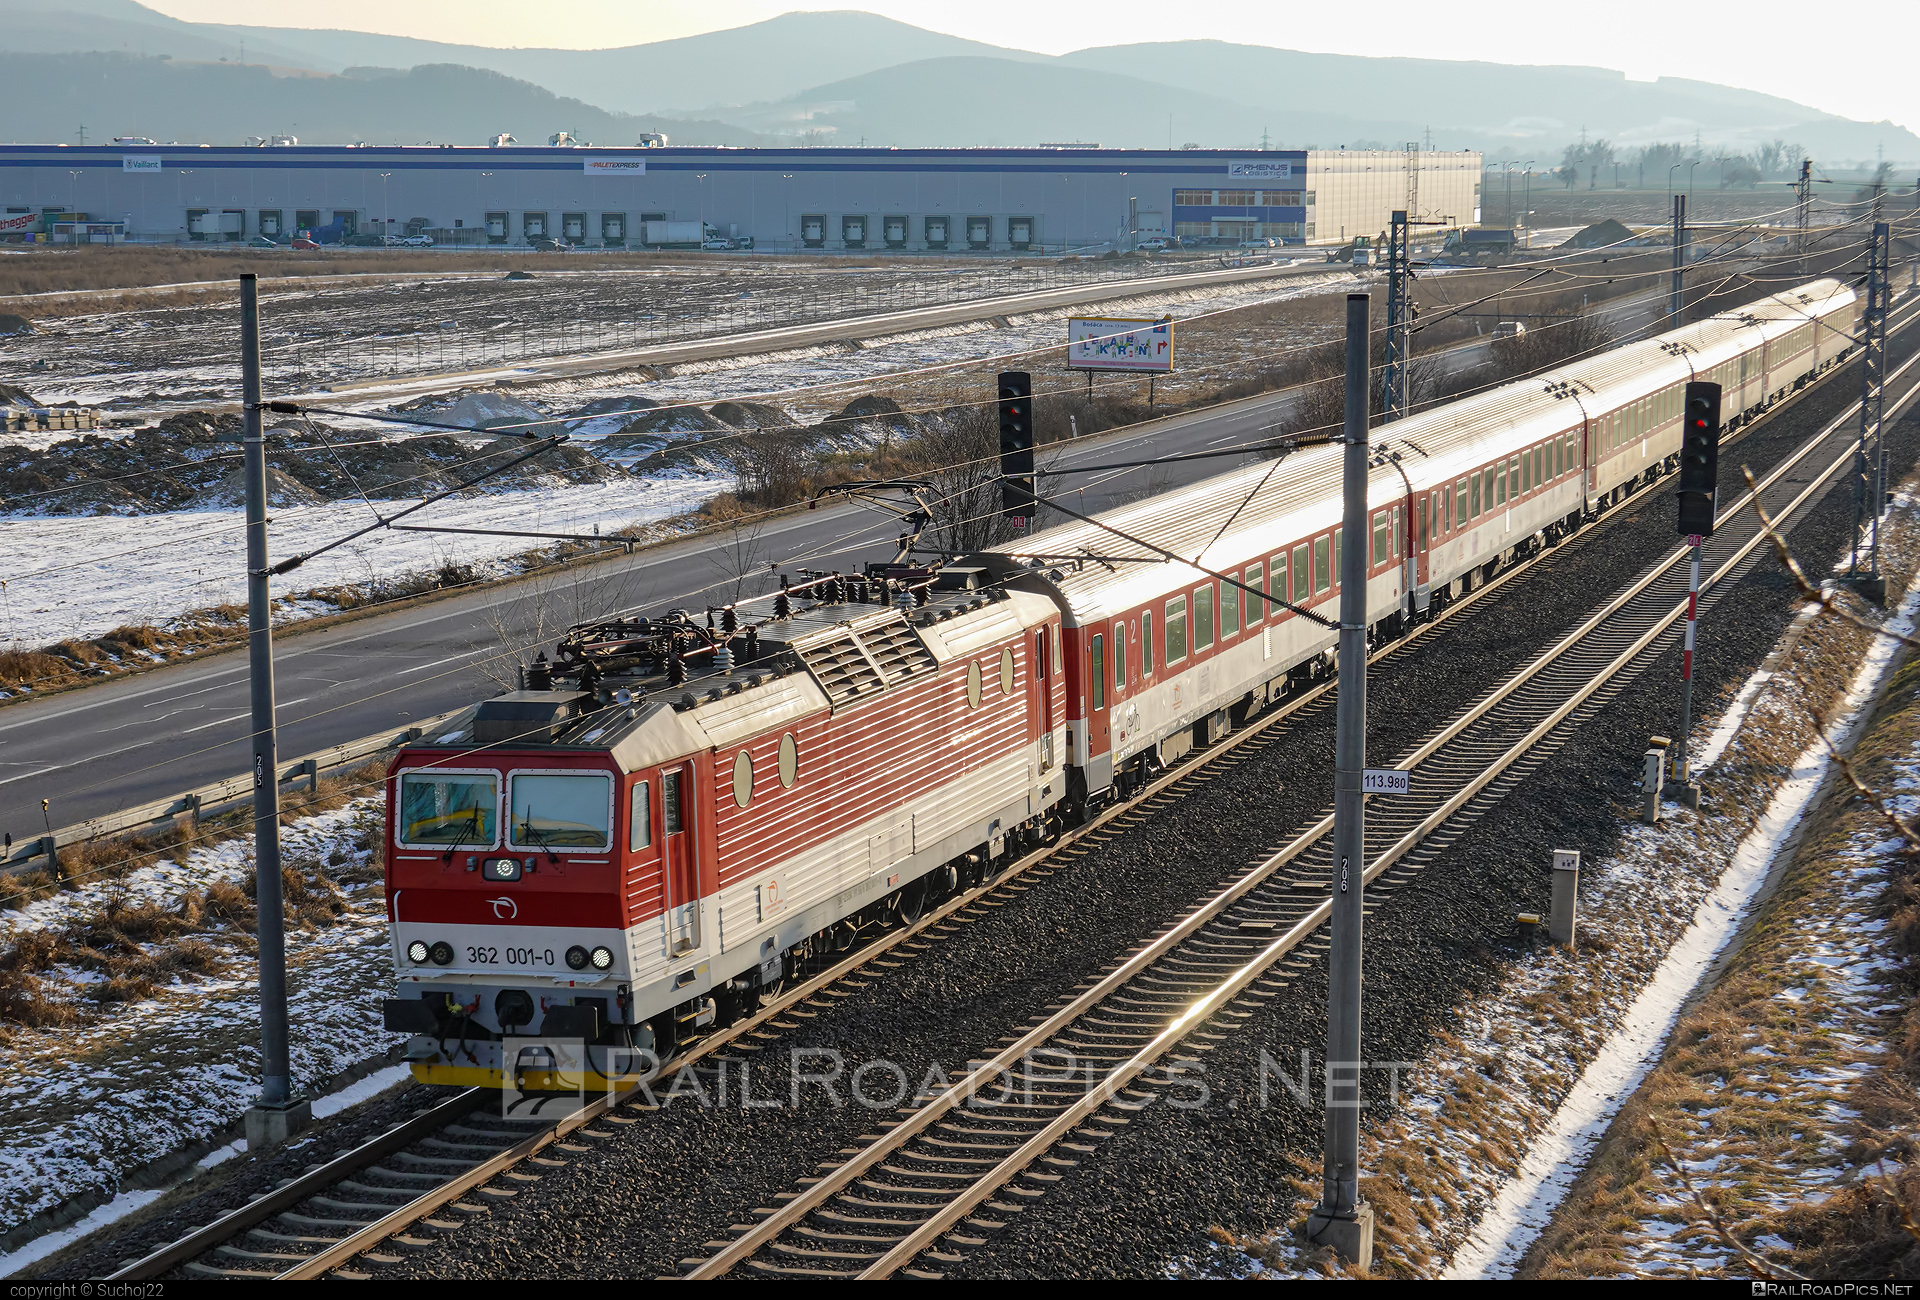 Škoda 69Er - 362 001-0 operated by Železničná Spoločnost' Slovensko, a.s. #ZeleznicnaSpolocnostSlovensko #eso #locomotive362 #rychleeso #skoda #skoda69er #zssk